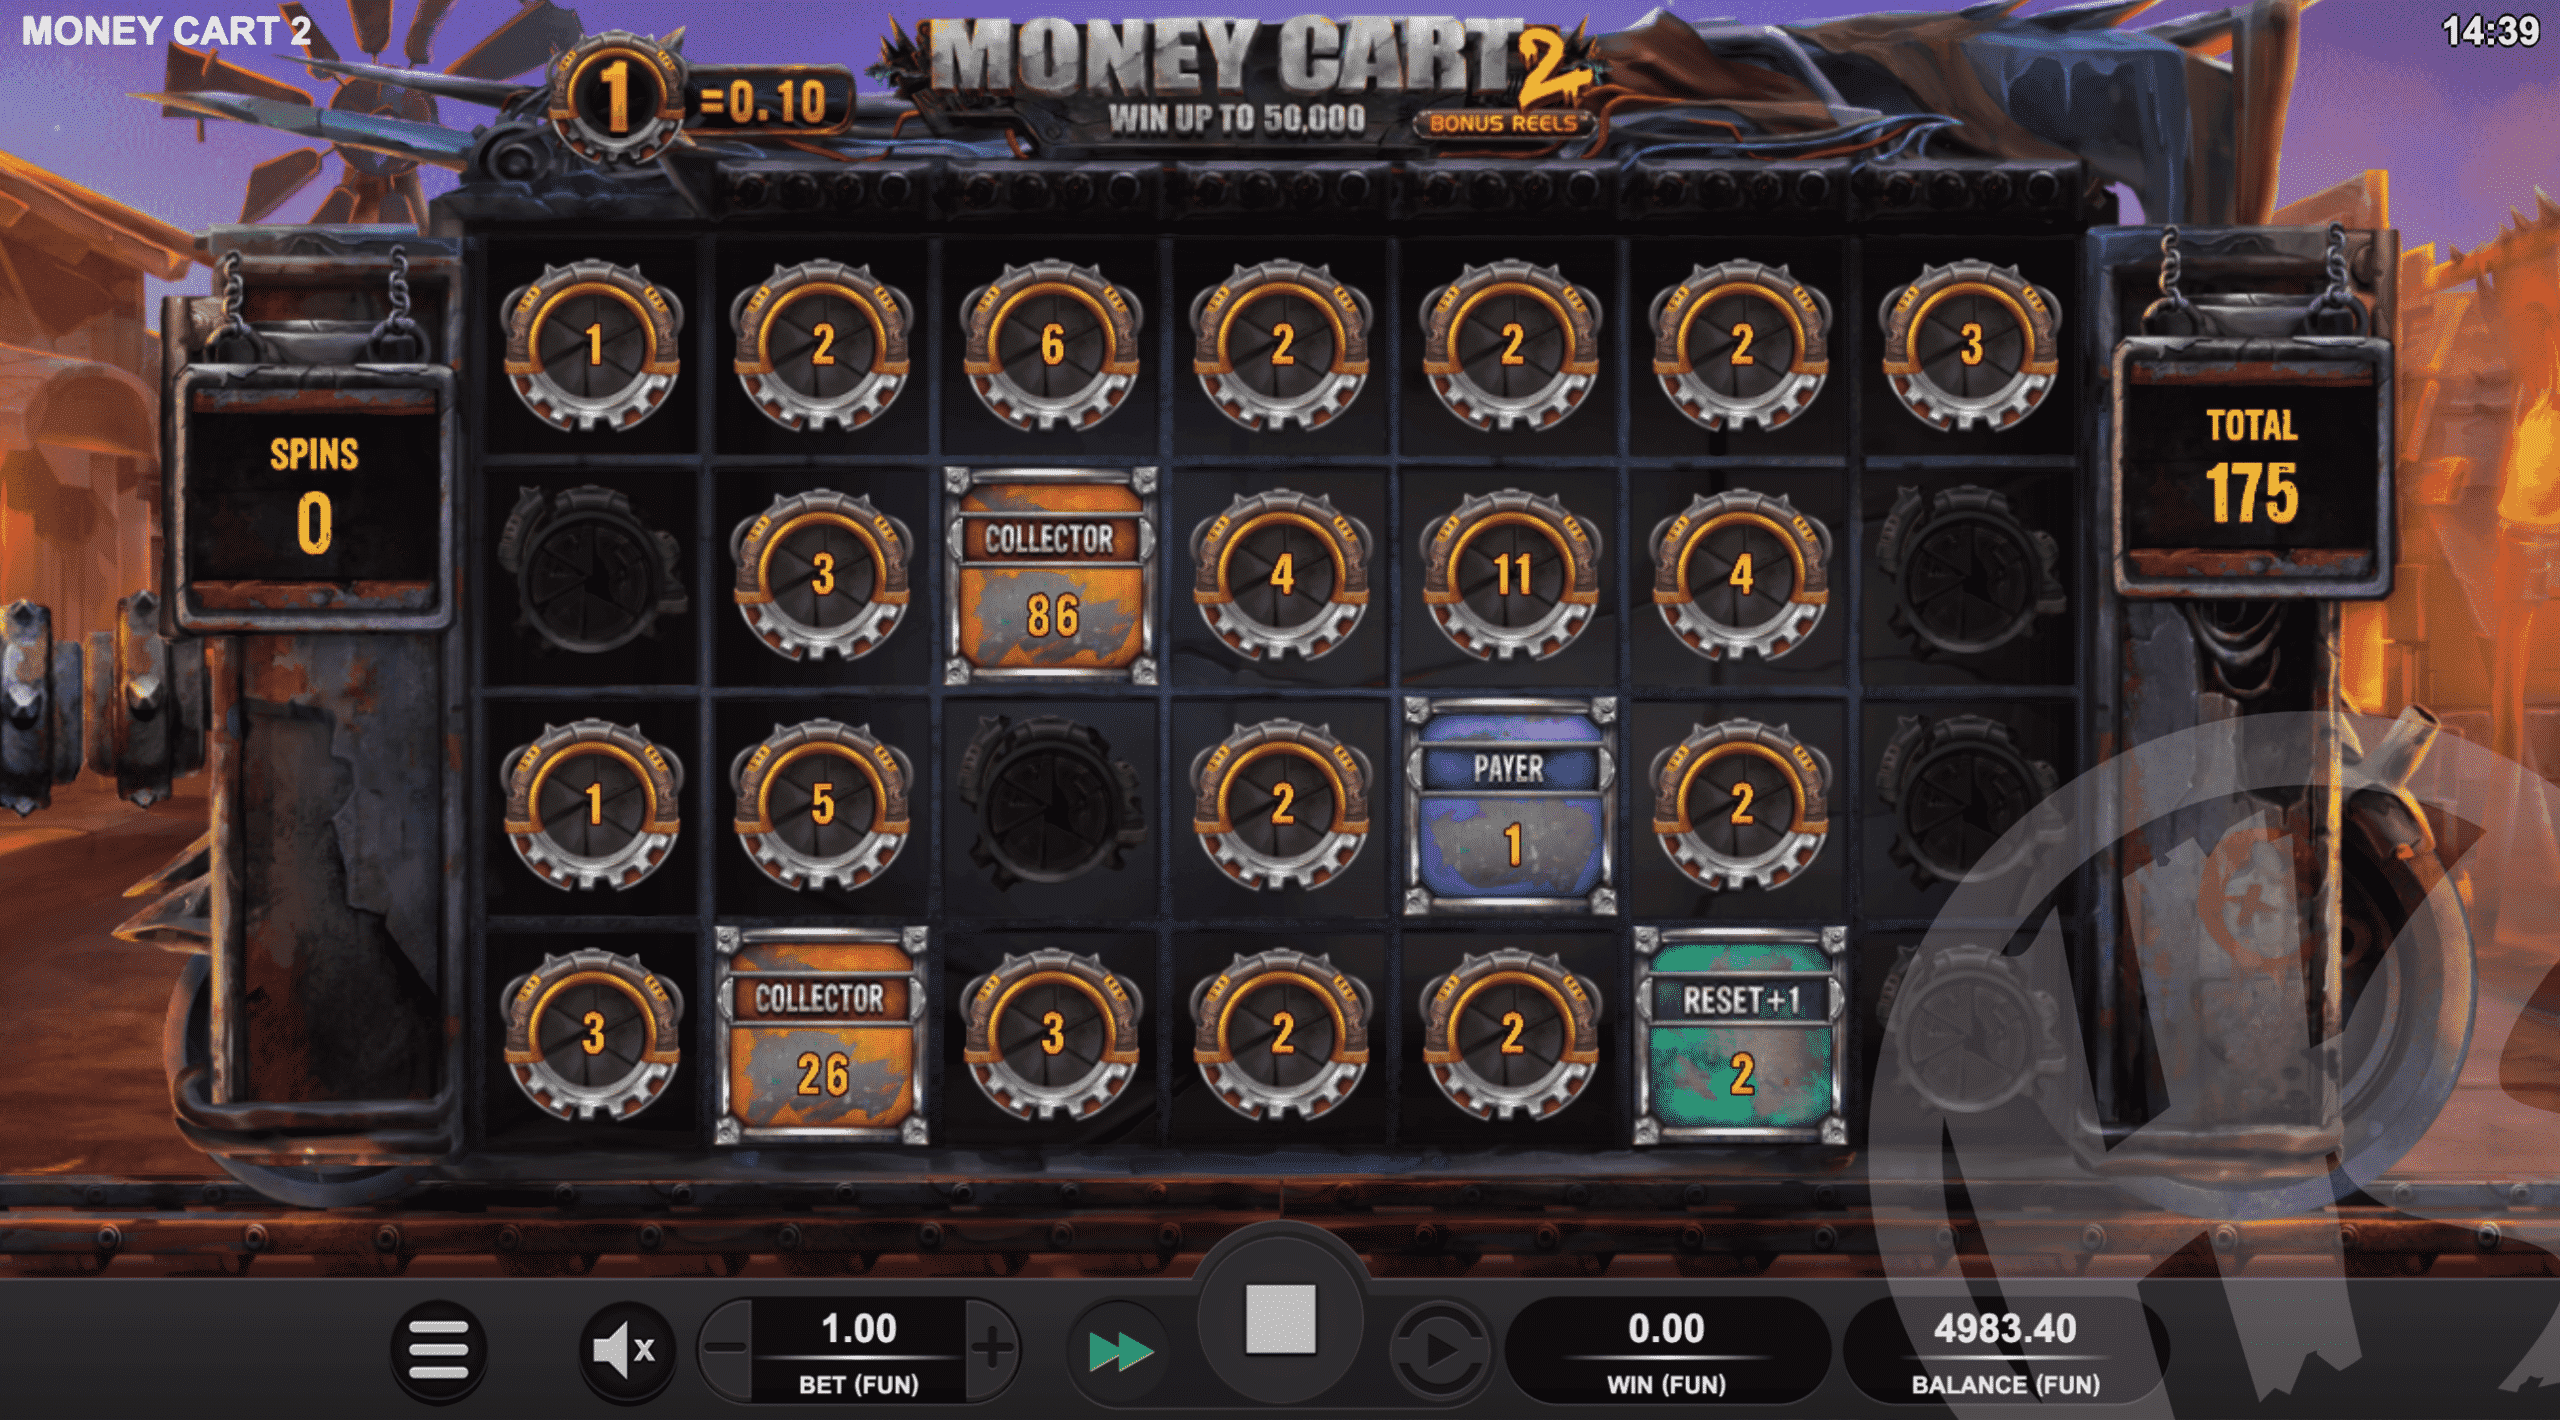 Money Cart 2 Bonus